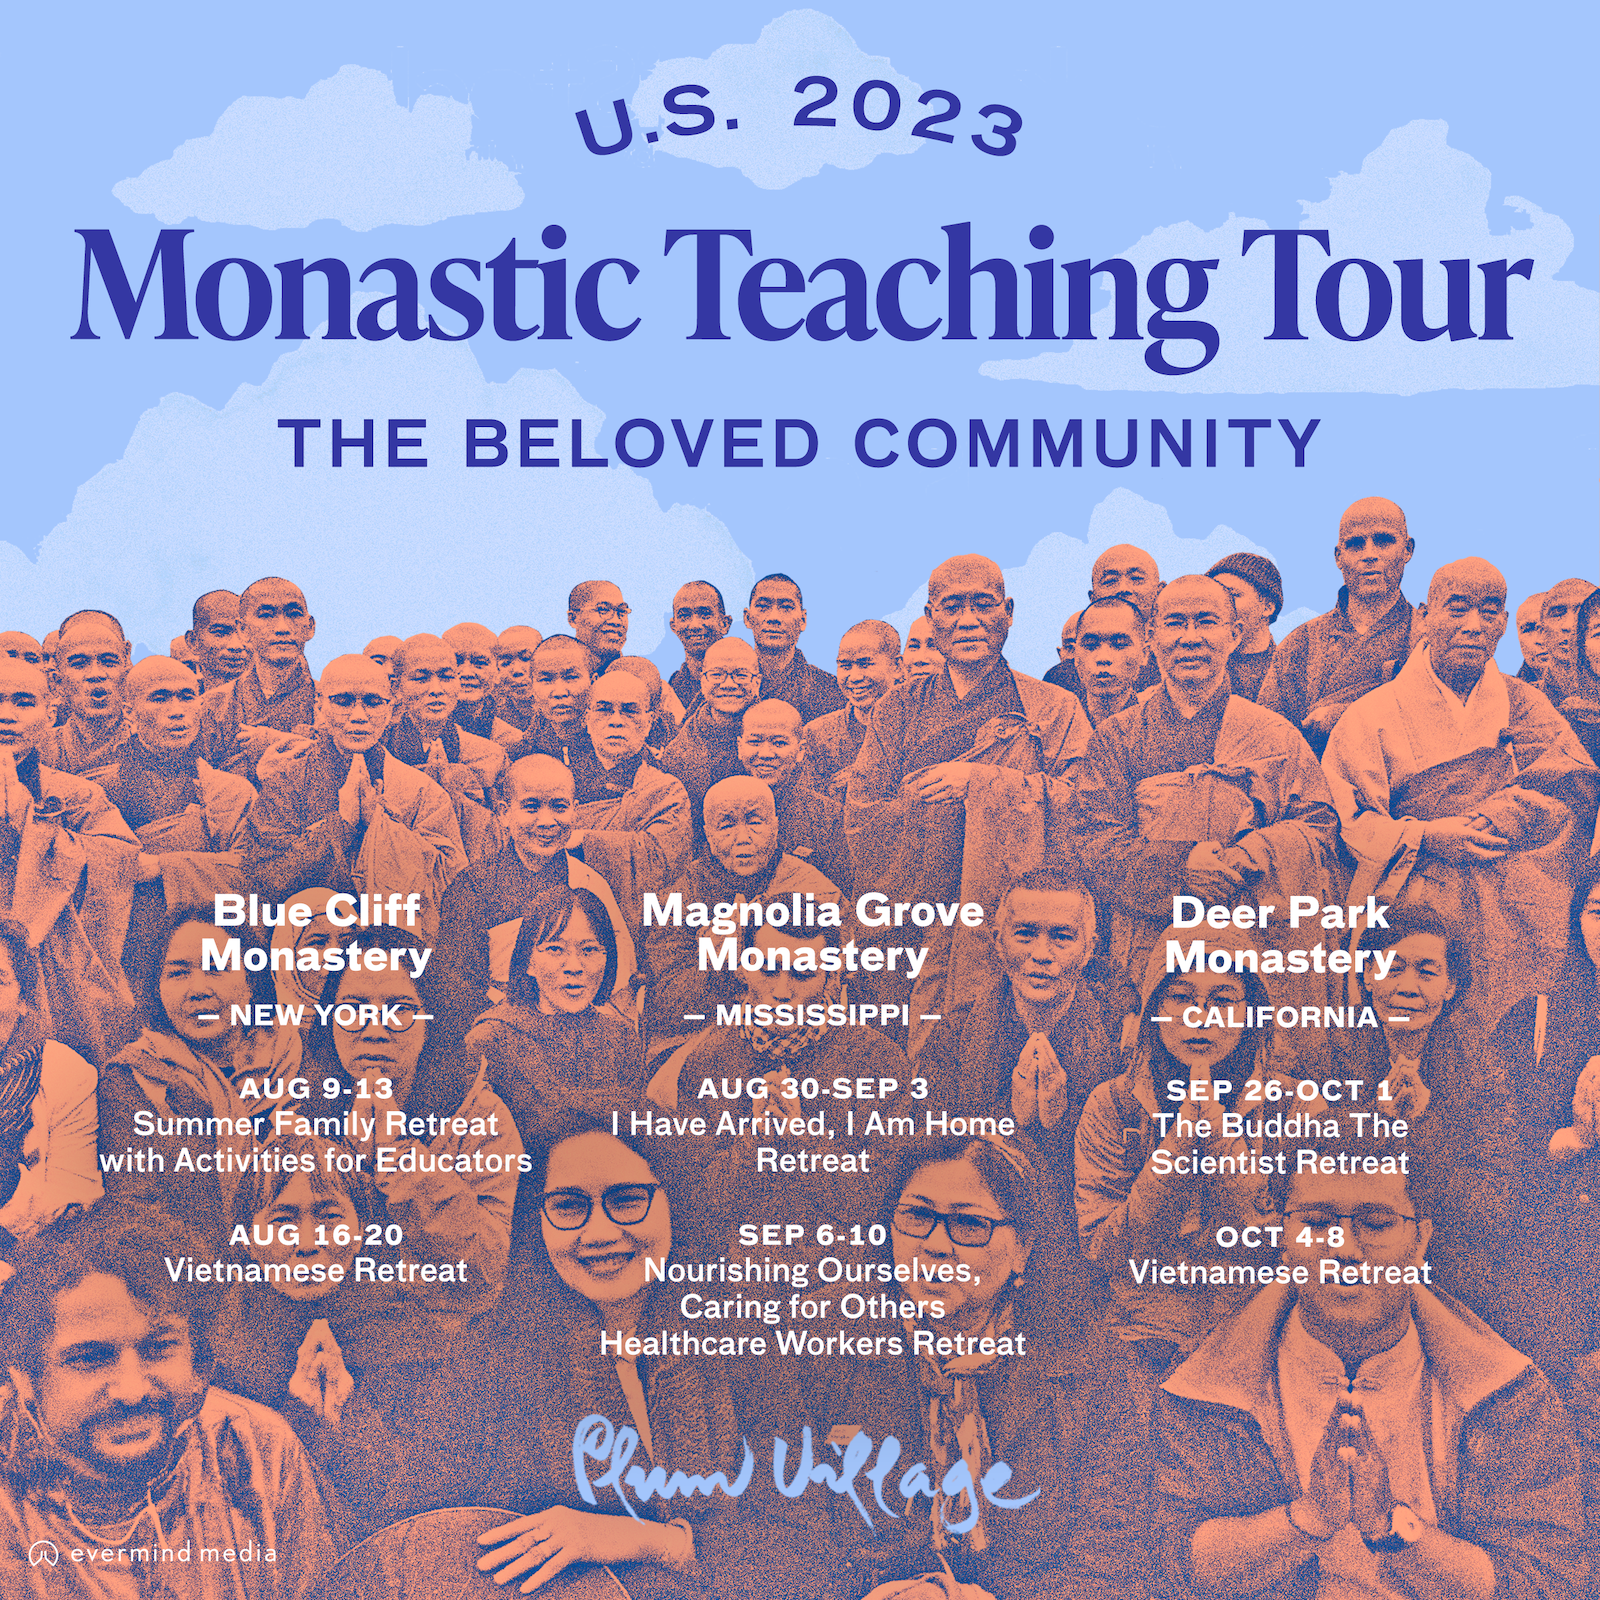 The Beloved Community: Thich Nhat Hanh’s Monastics To Tour U.S. Aug. 2 to Oct. 24